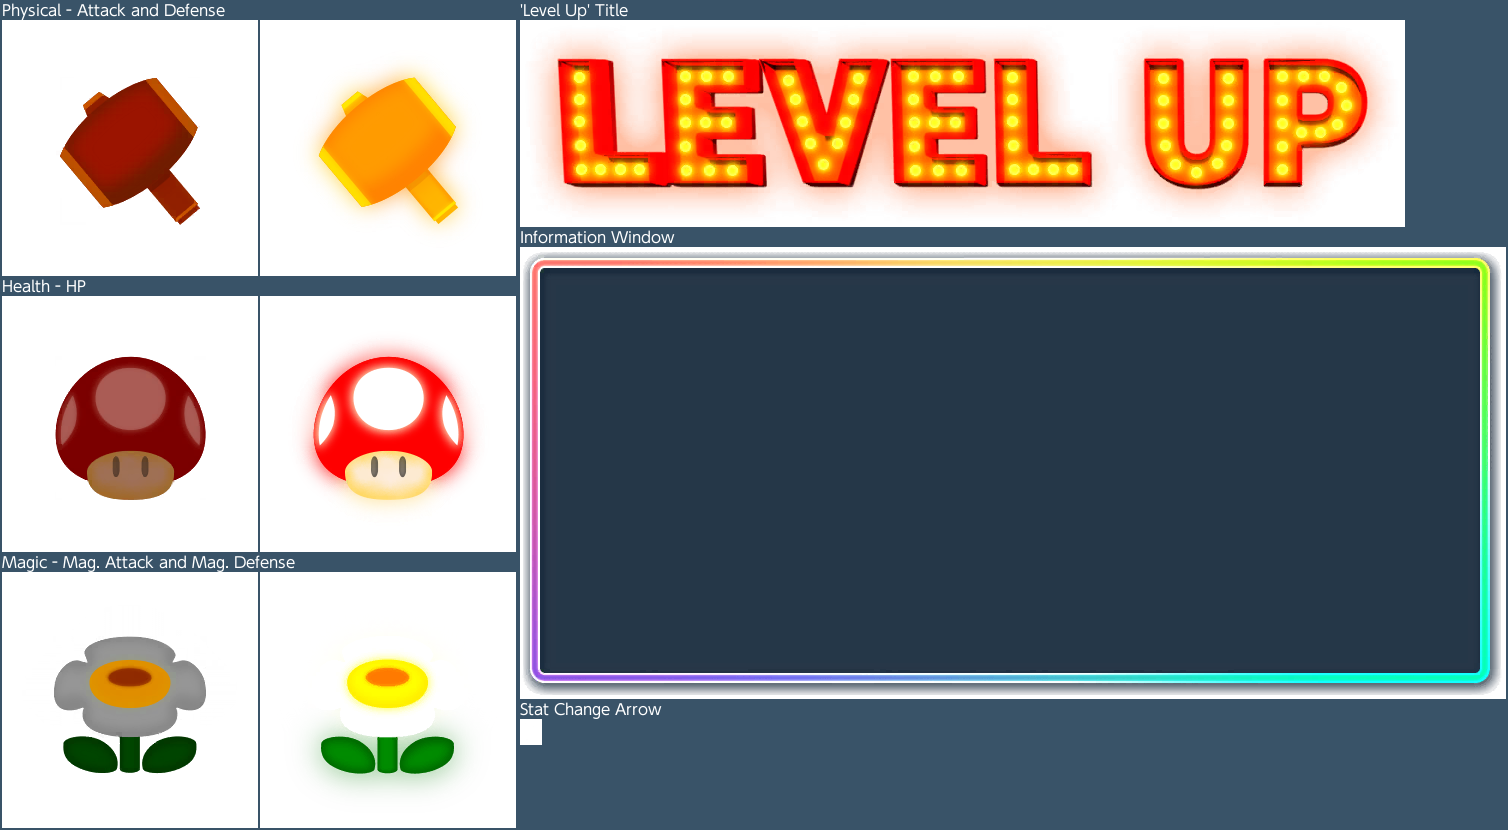 Level Up Bonus Icons and Parts